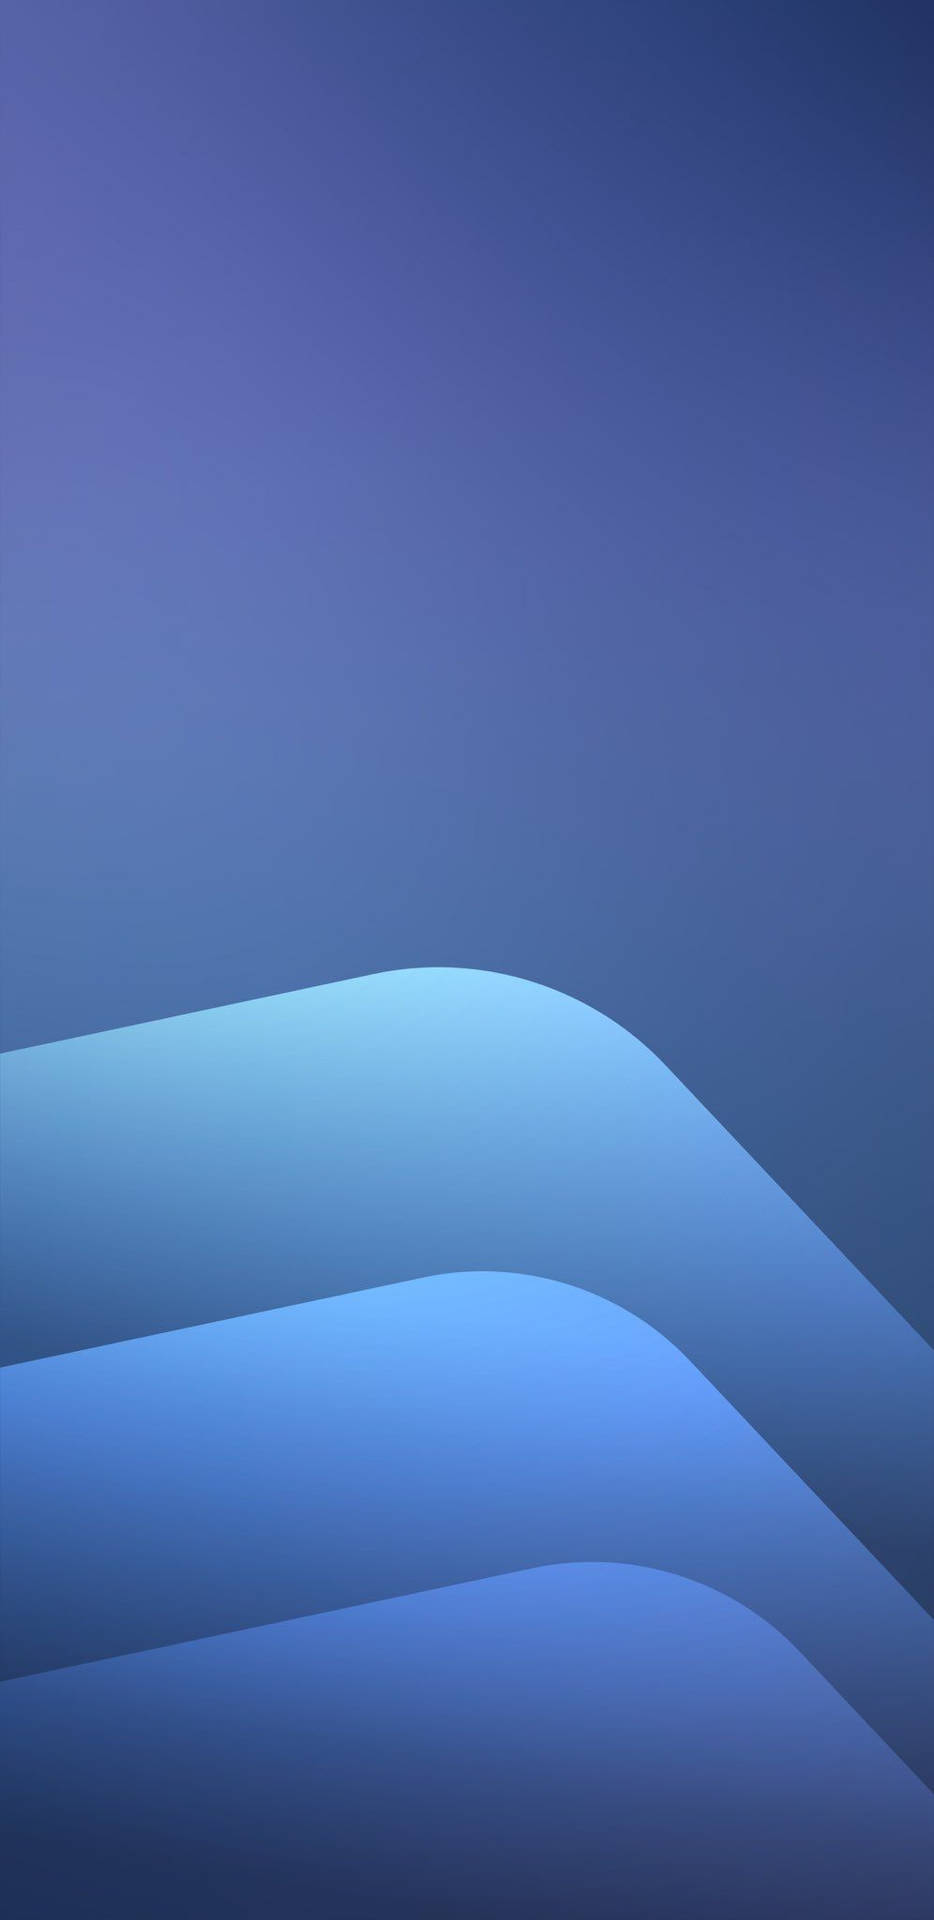 Triple Curve Blue Iphone Background